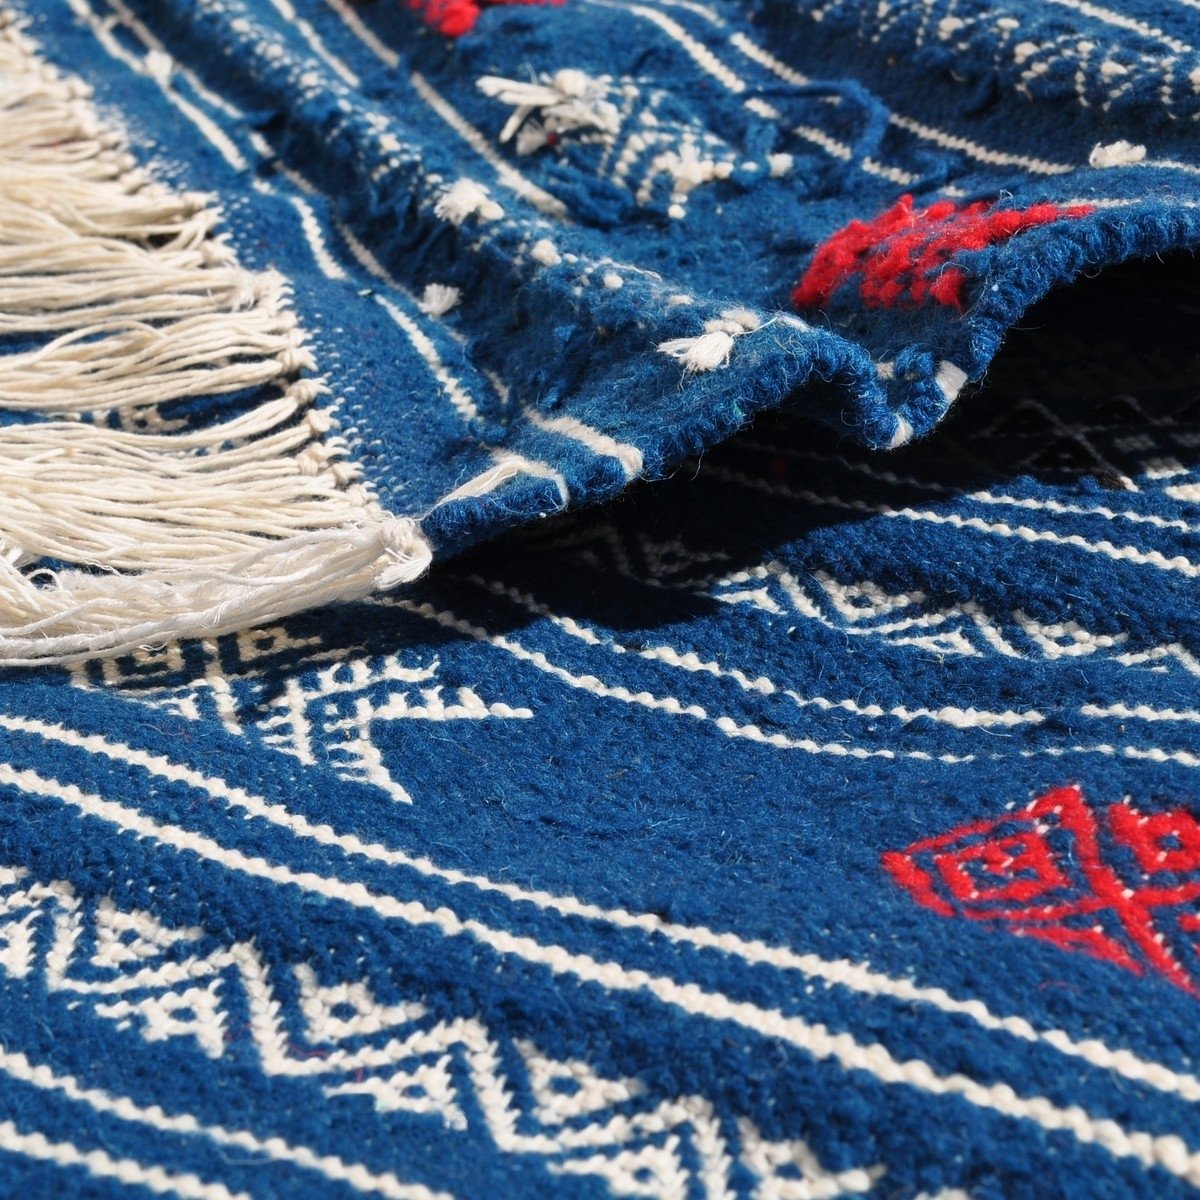 Tapete berbere Tapete Kilim longo Massoud 70x180 Azul (Tecidos à mão, Lã, Tunísia) Tapete tunisiano kilim, estilo marroquino. Ta